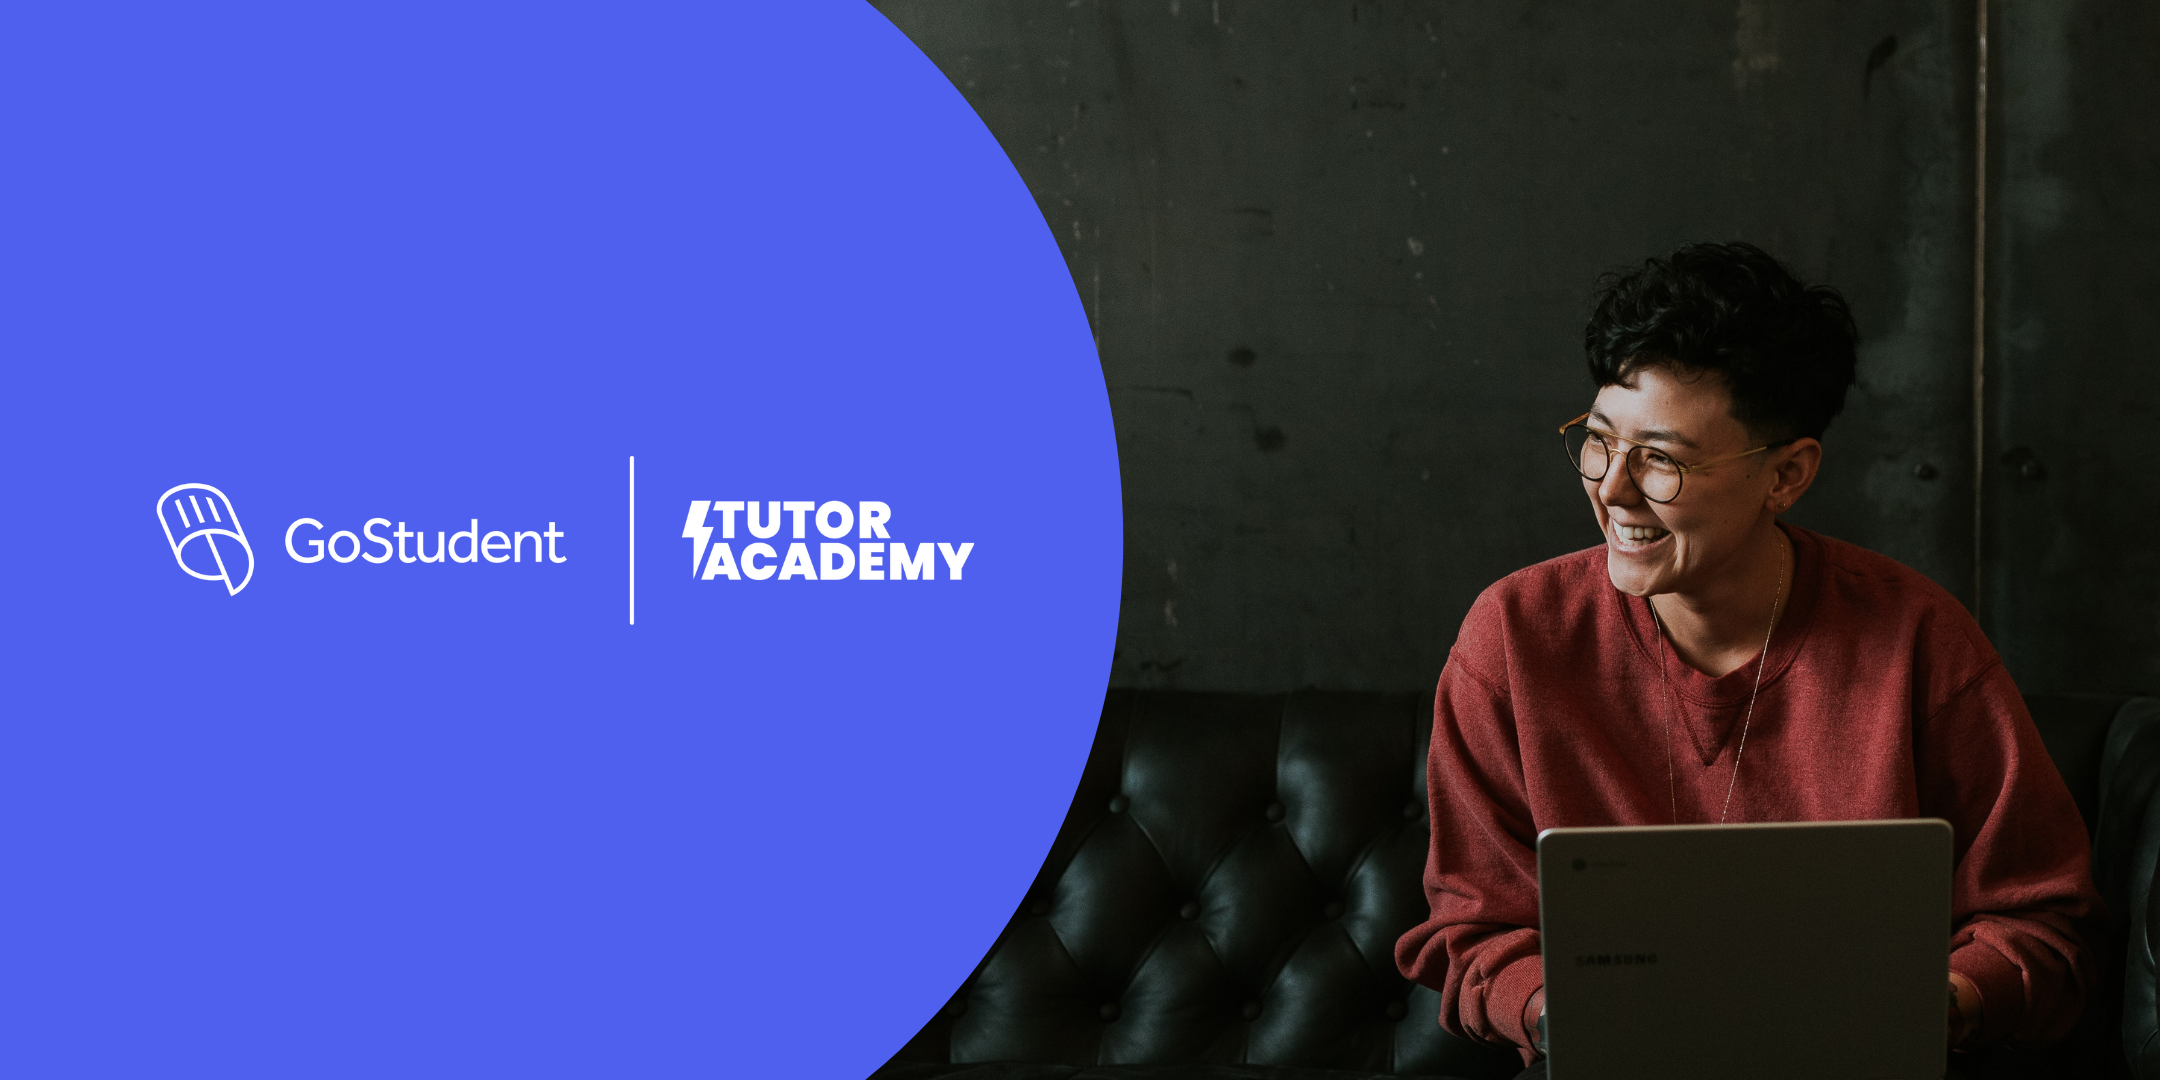 ⚡ Tutor Academy ⚡